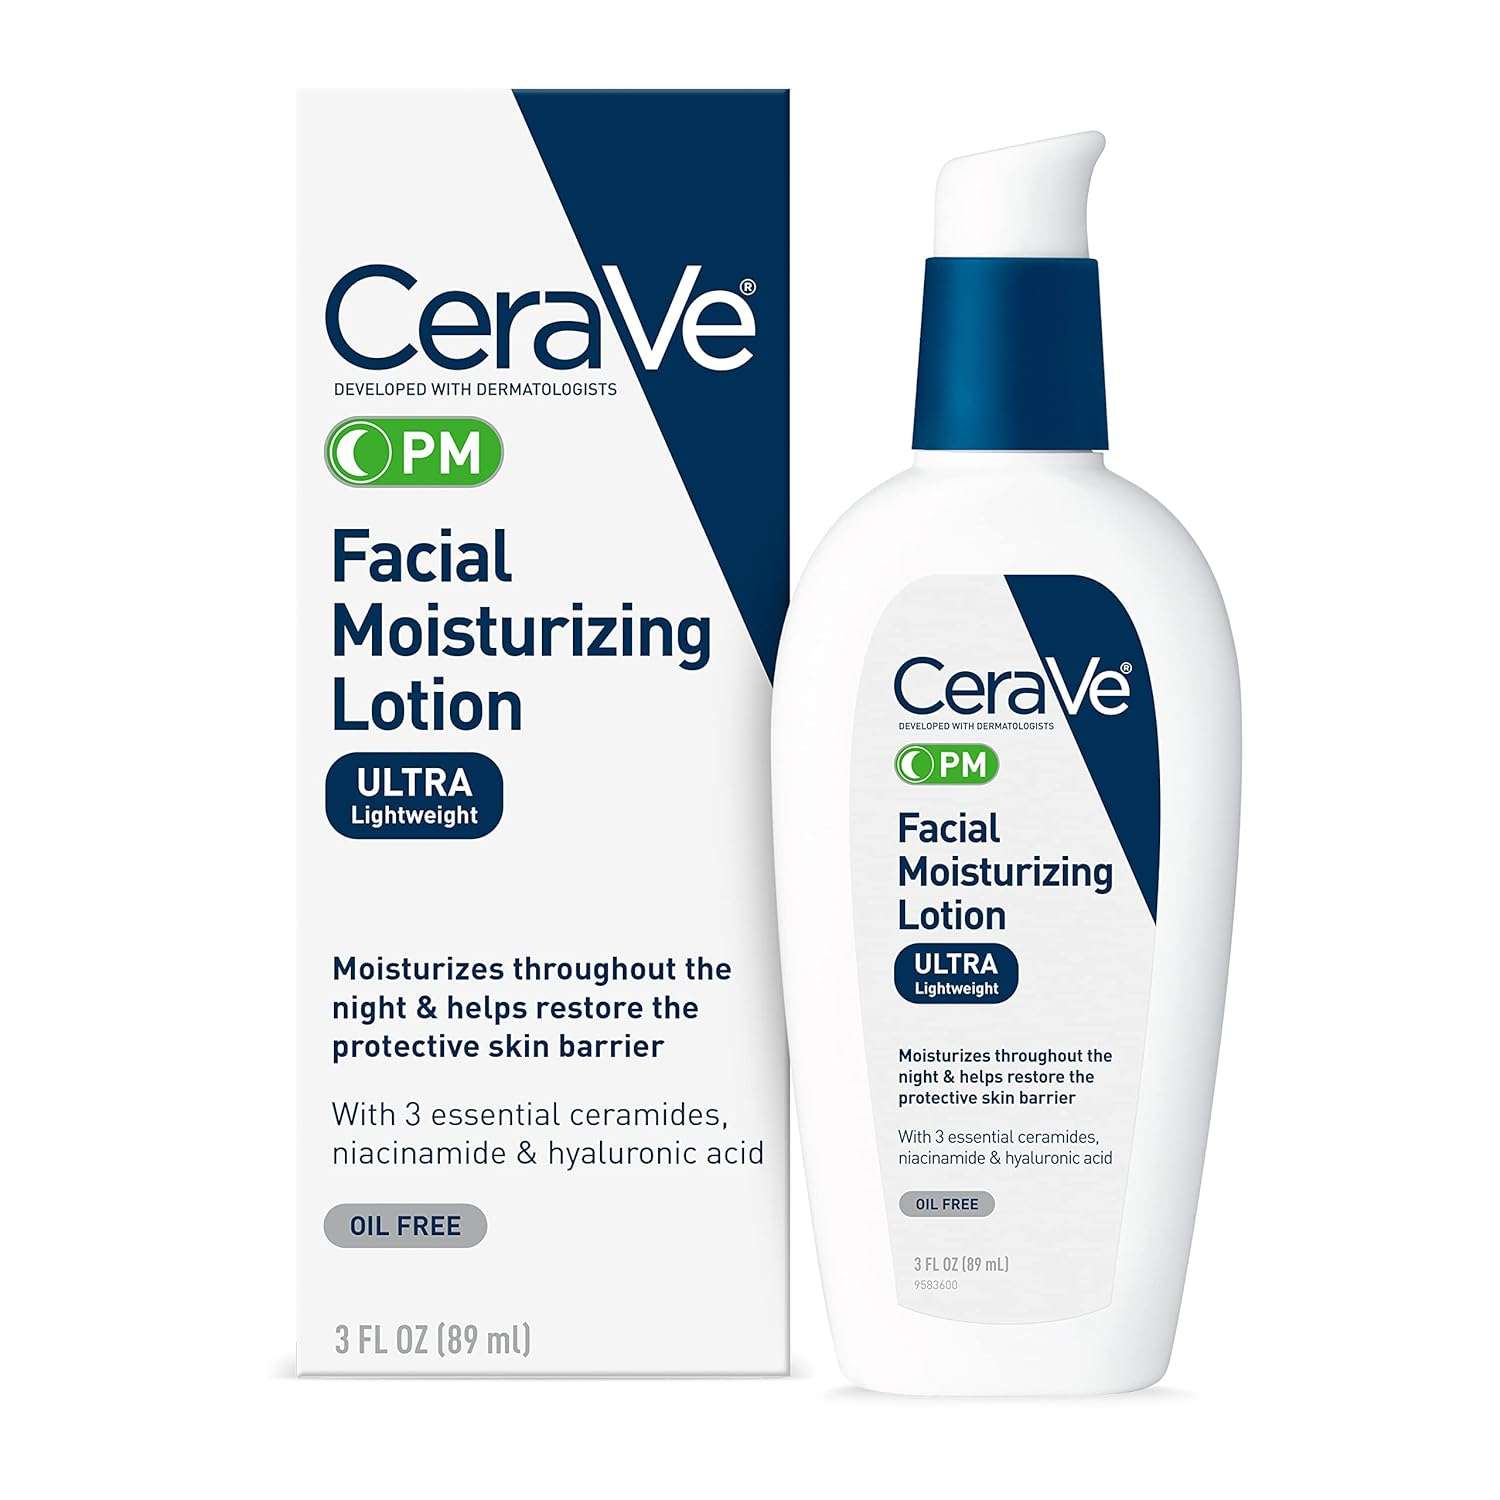 CeraVe PM Facial Moisturizing Lotion Review